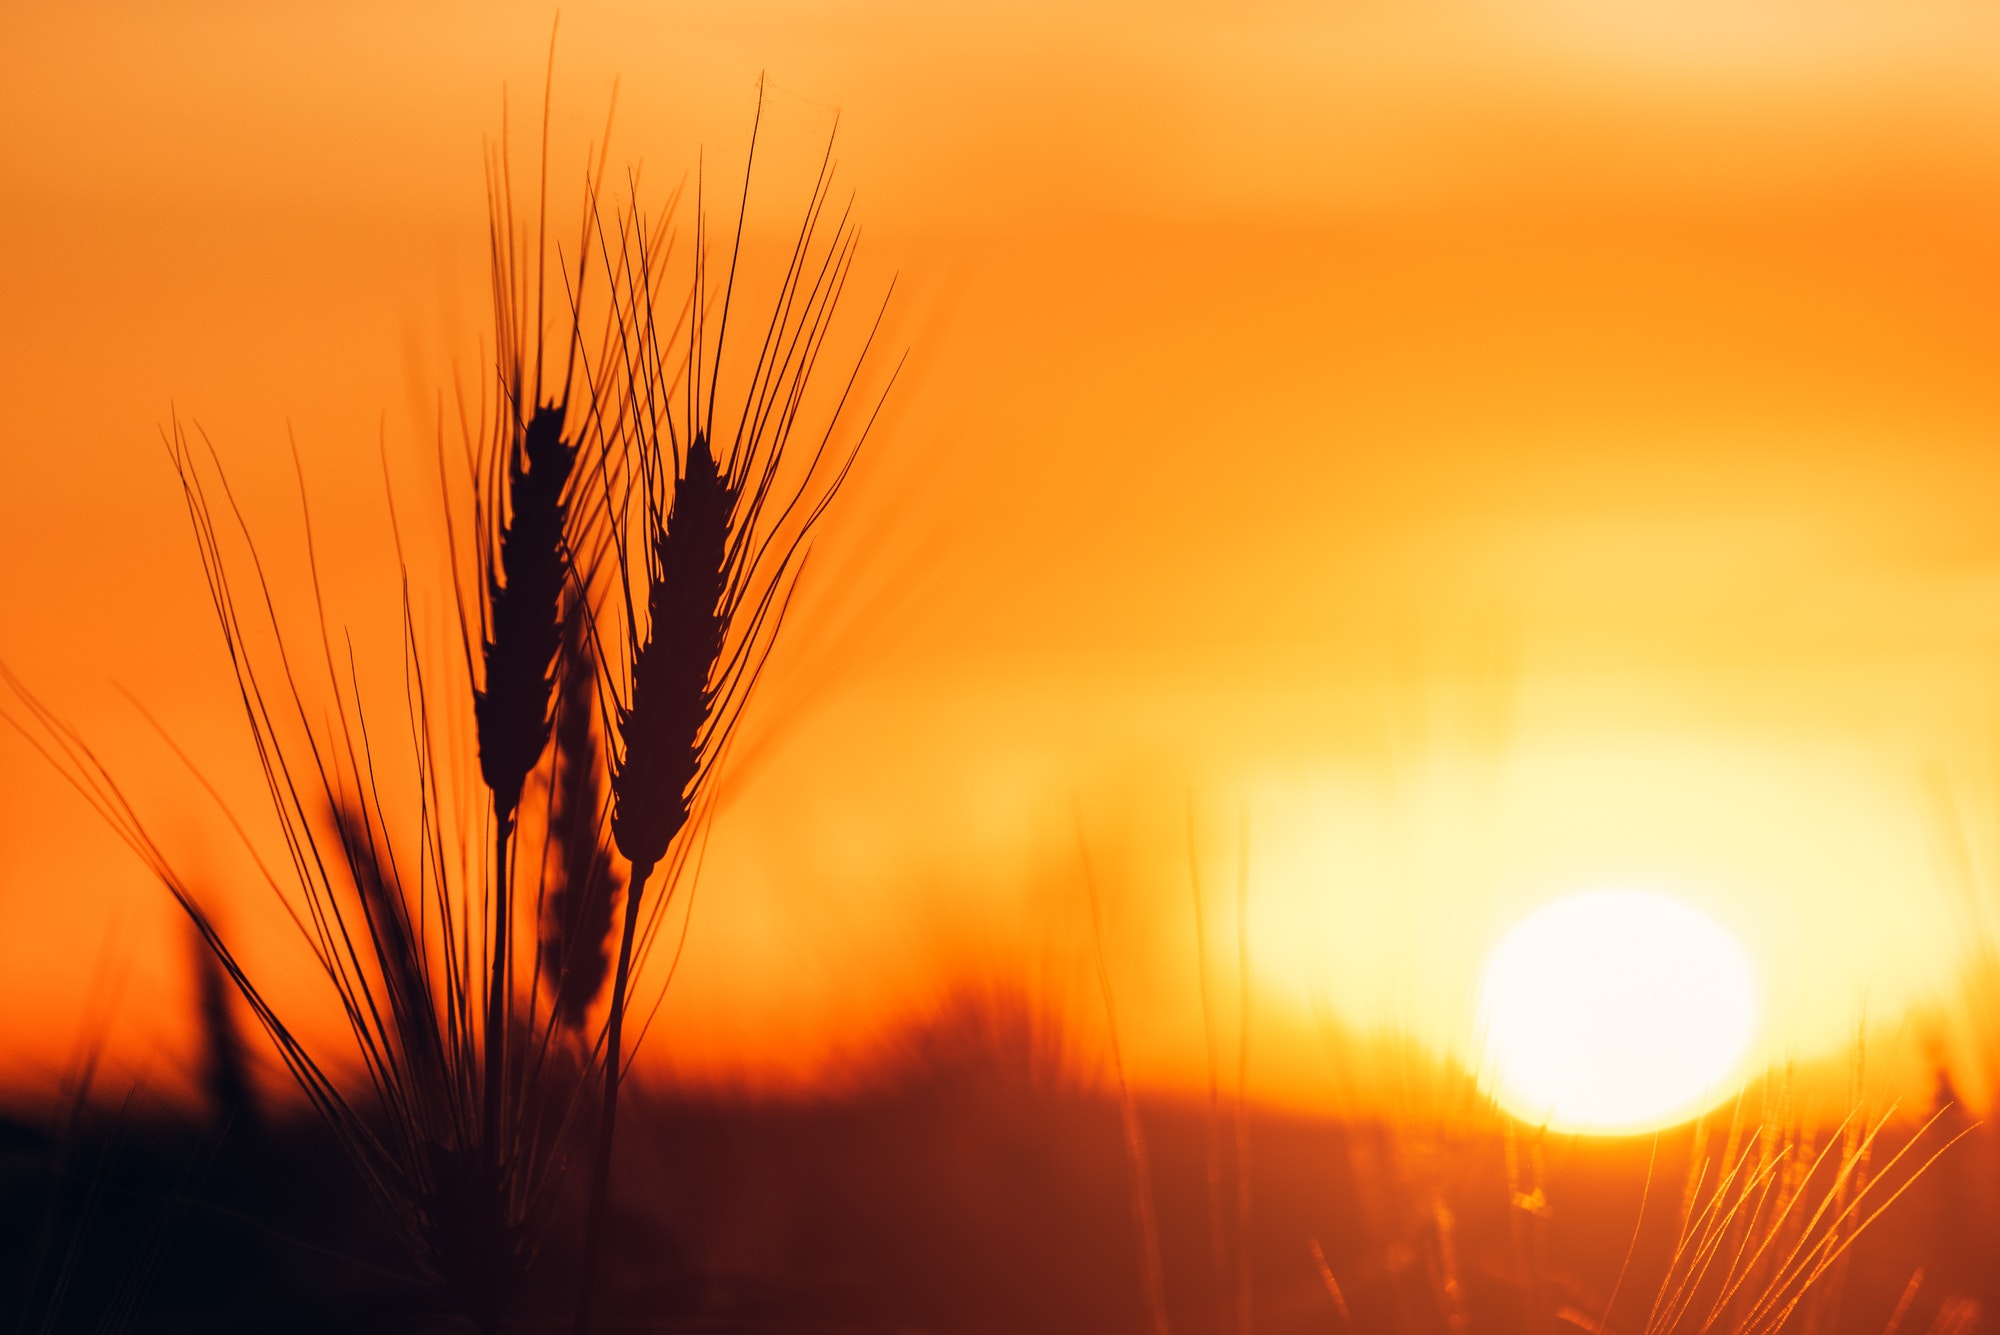 Barley ears in sunset